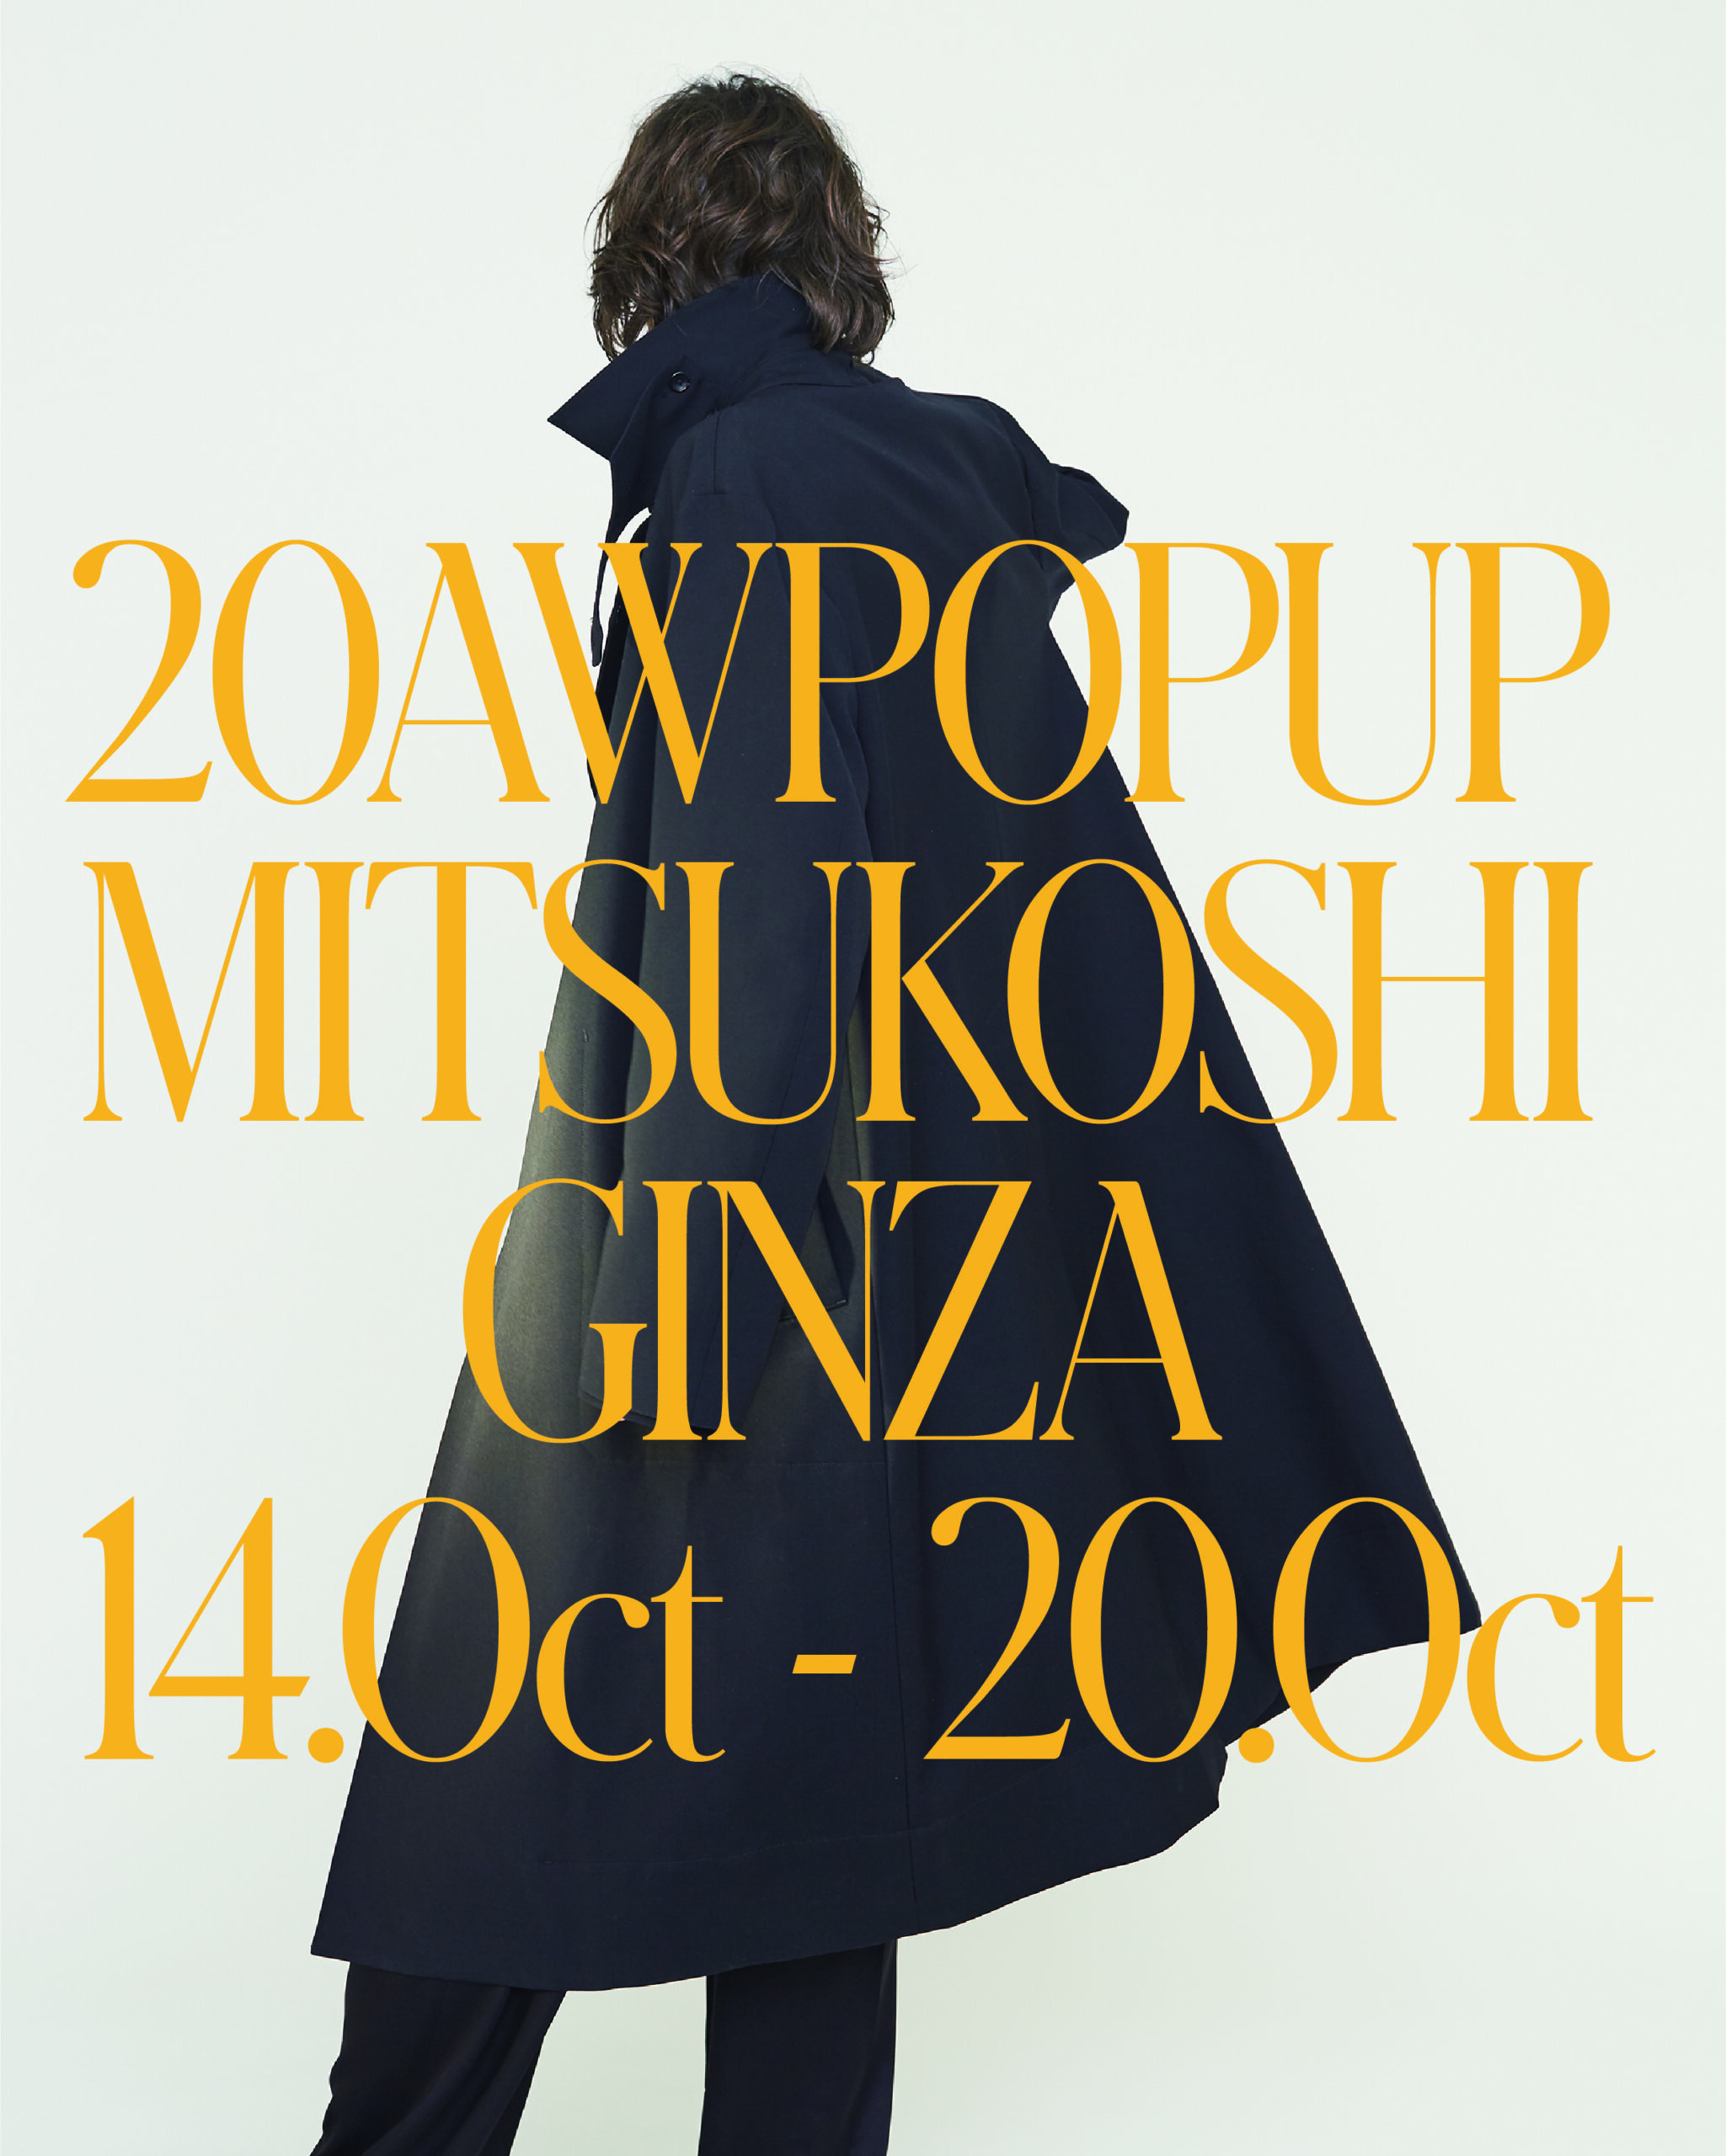 POP UP STORE AT MITSUKOSHI GINZA